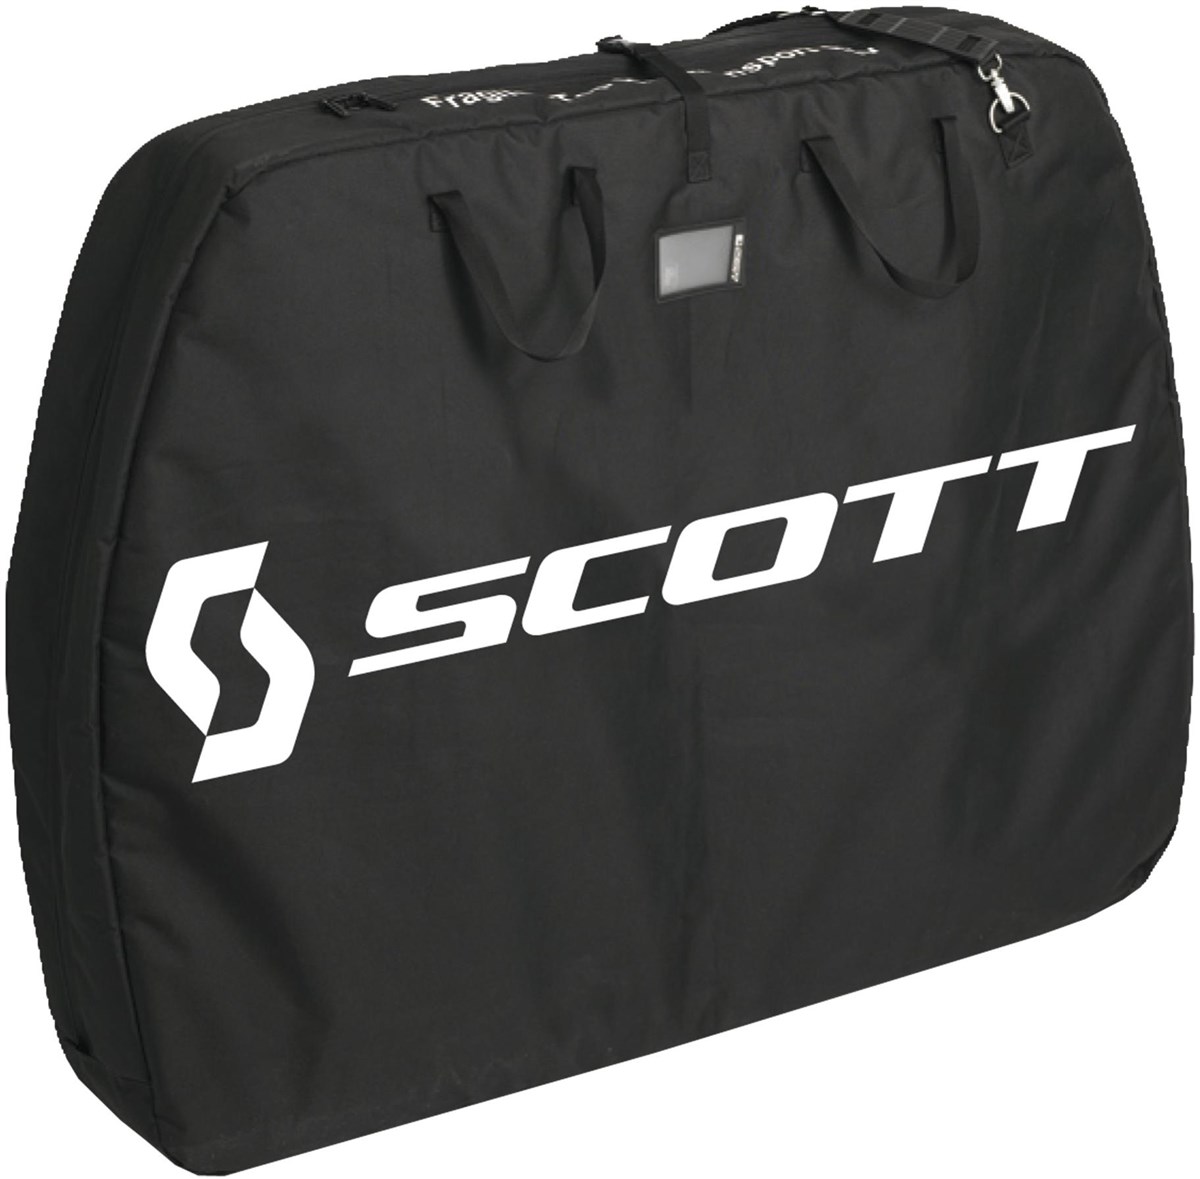 Scott Classic Bike Transport Bag product image